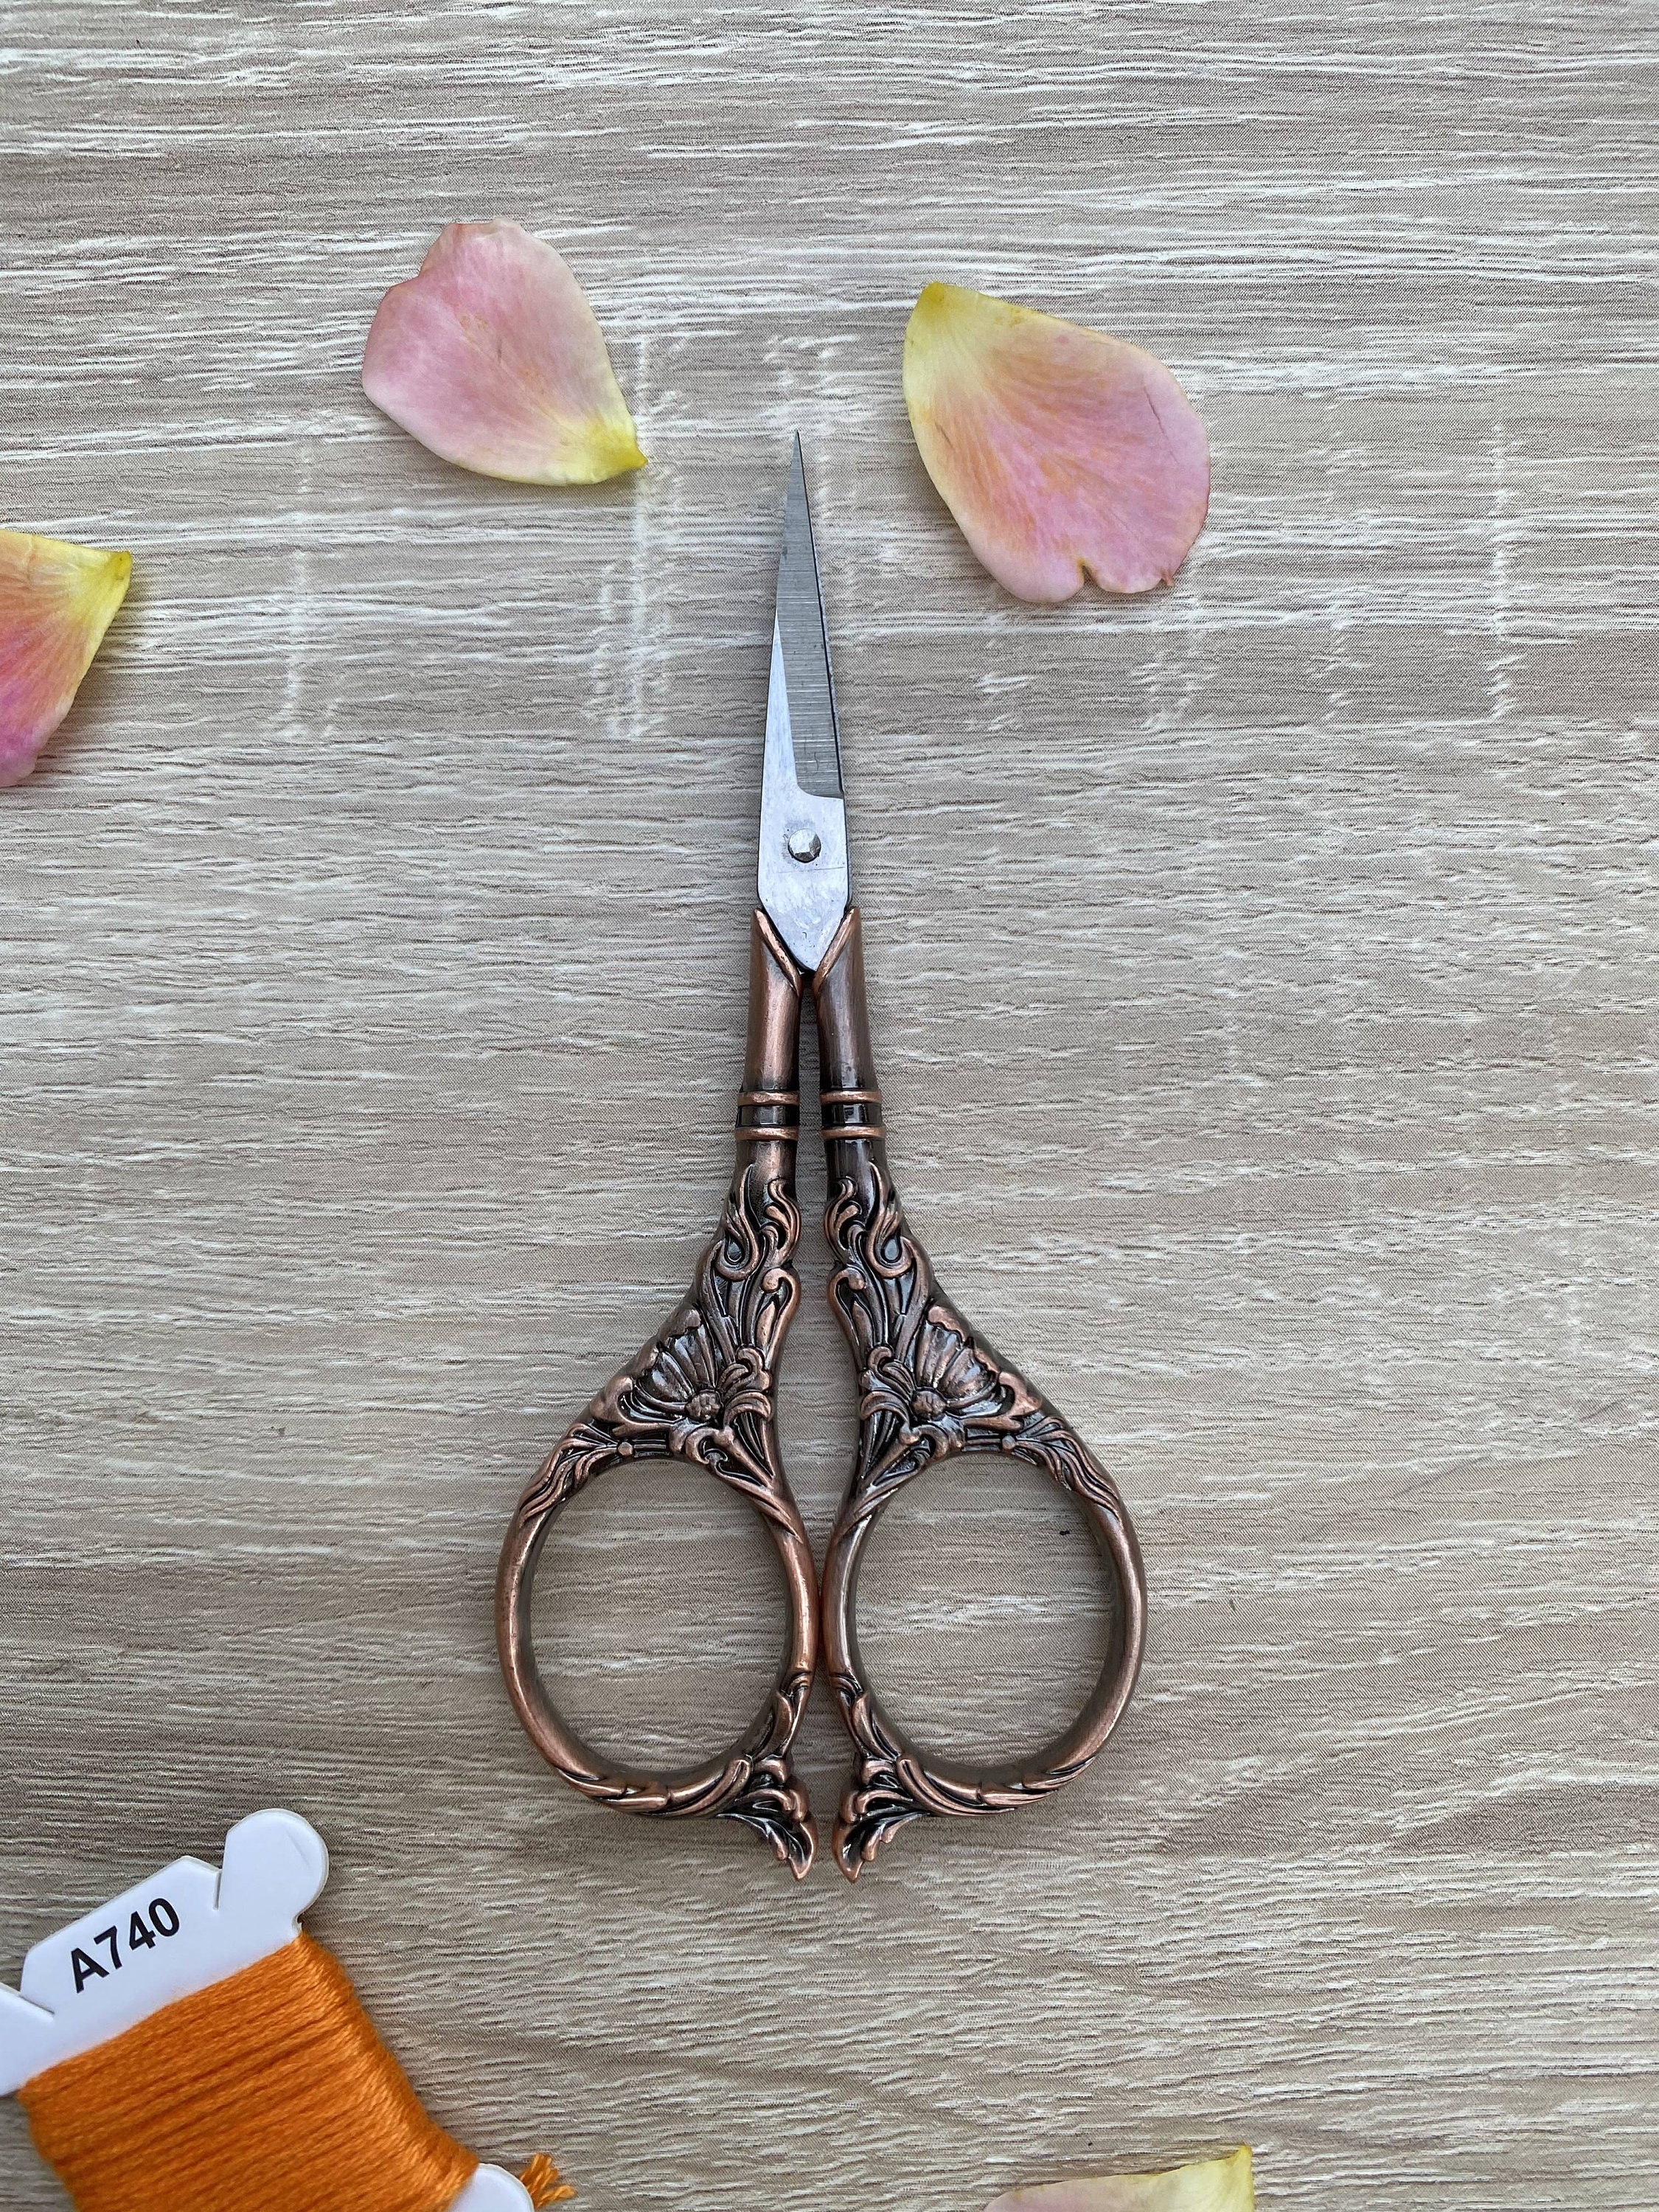 Embroidery Scissors, Plum Blossom Scissors, Floral Embroidery Scissors,  Vintage Style Scissors, Thread Scissors, Stainless Steel Scissors 